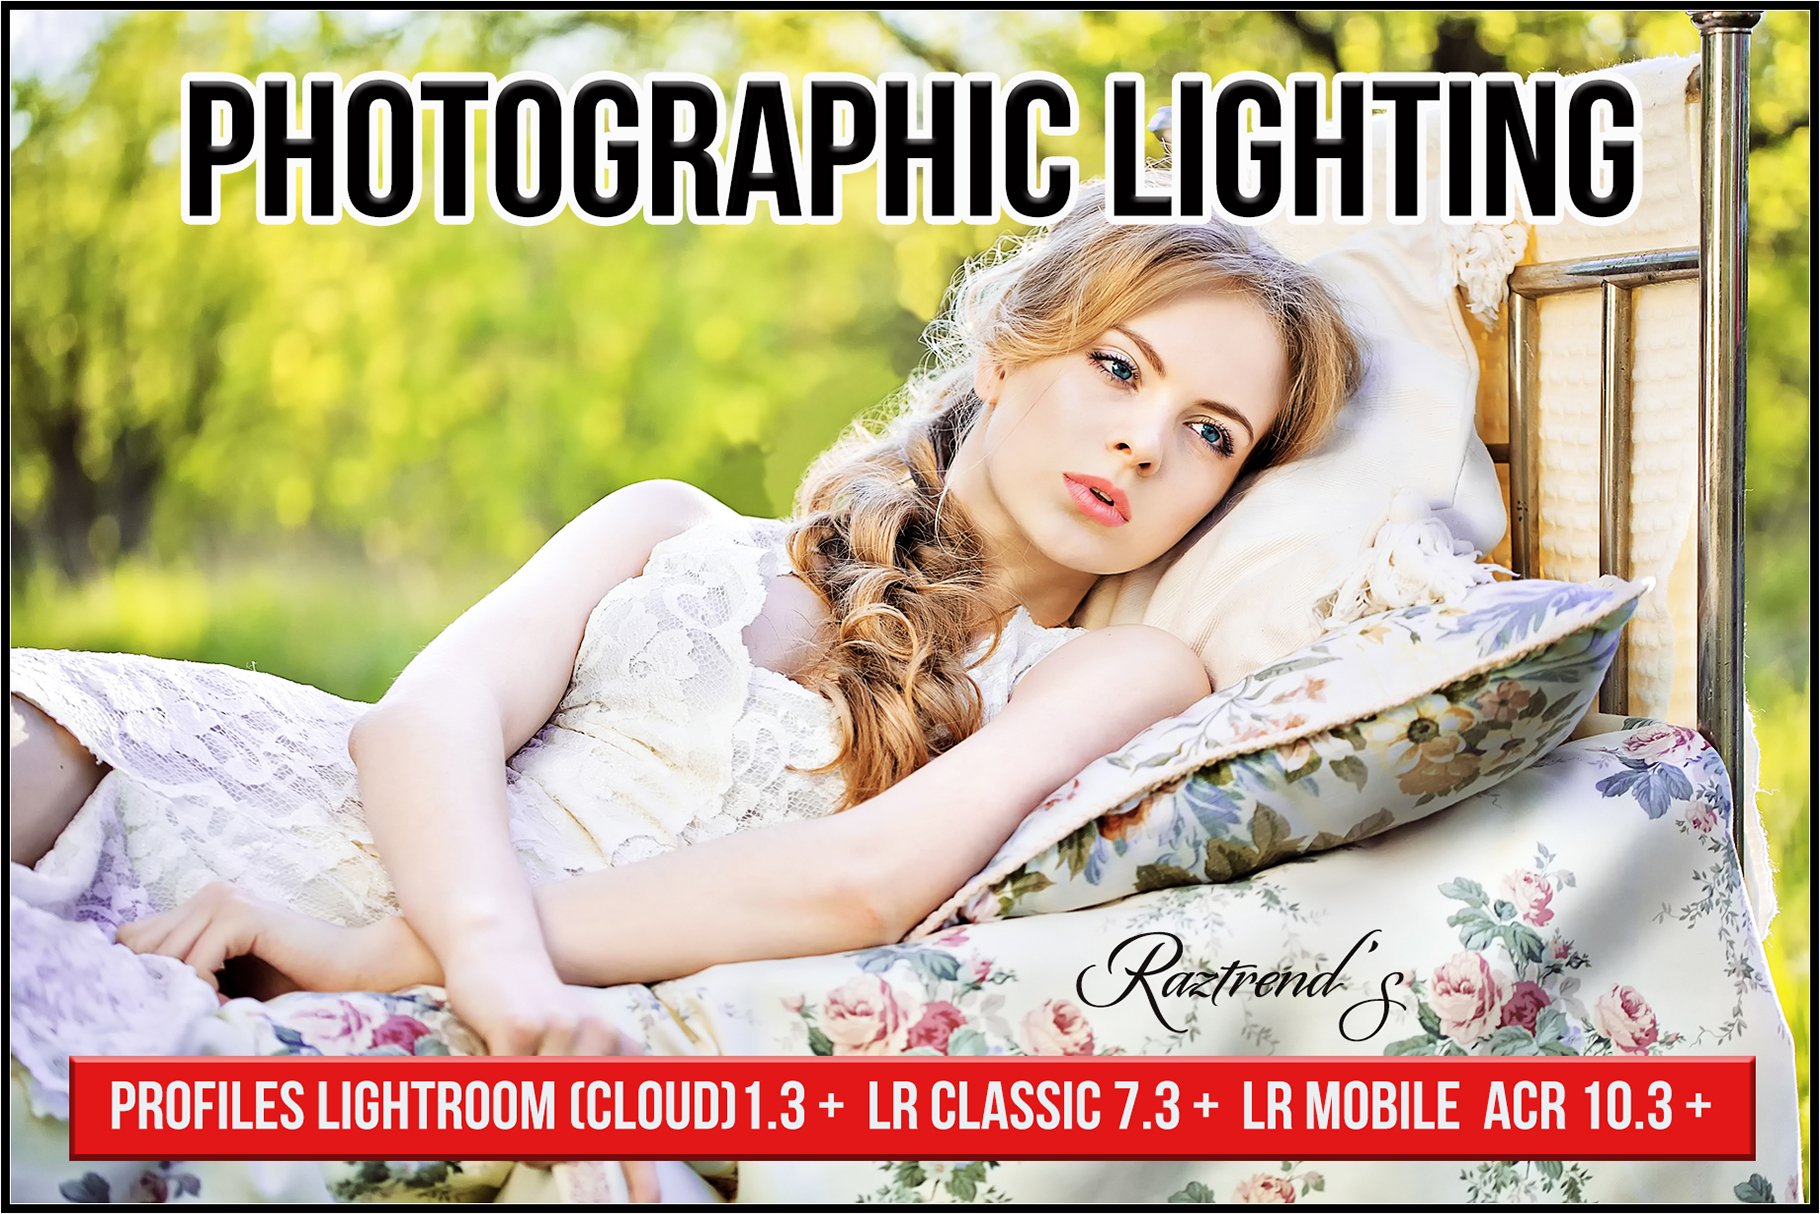 Photographic Lighting profilescover image.